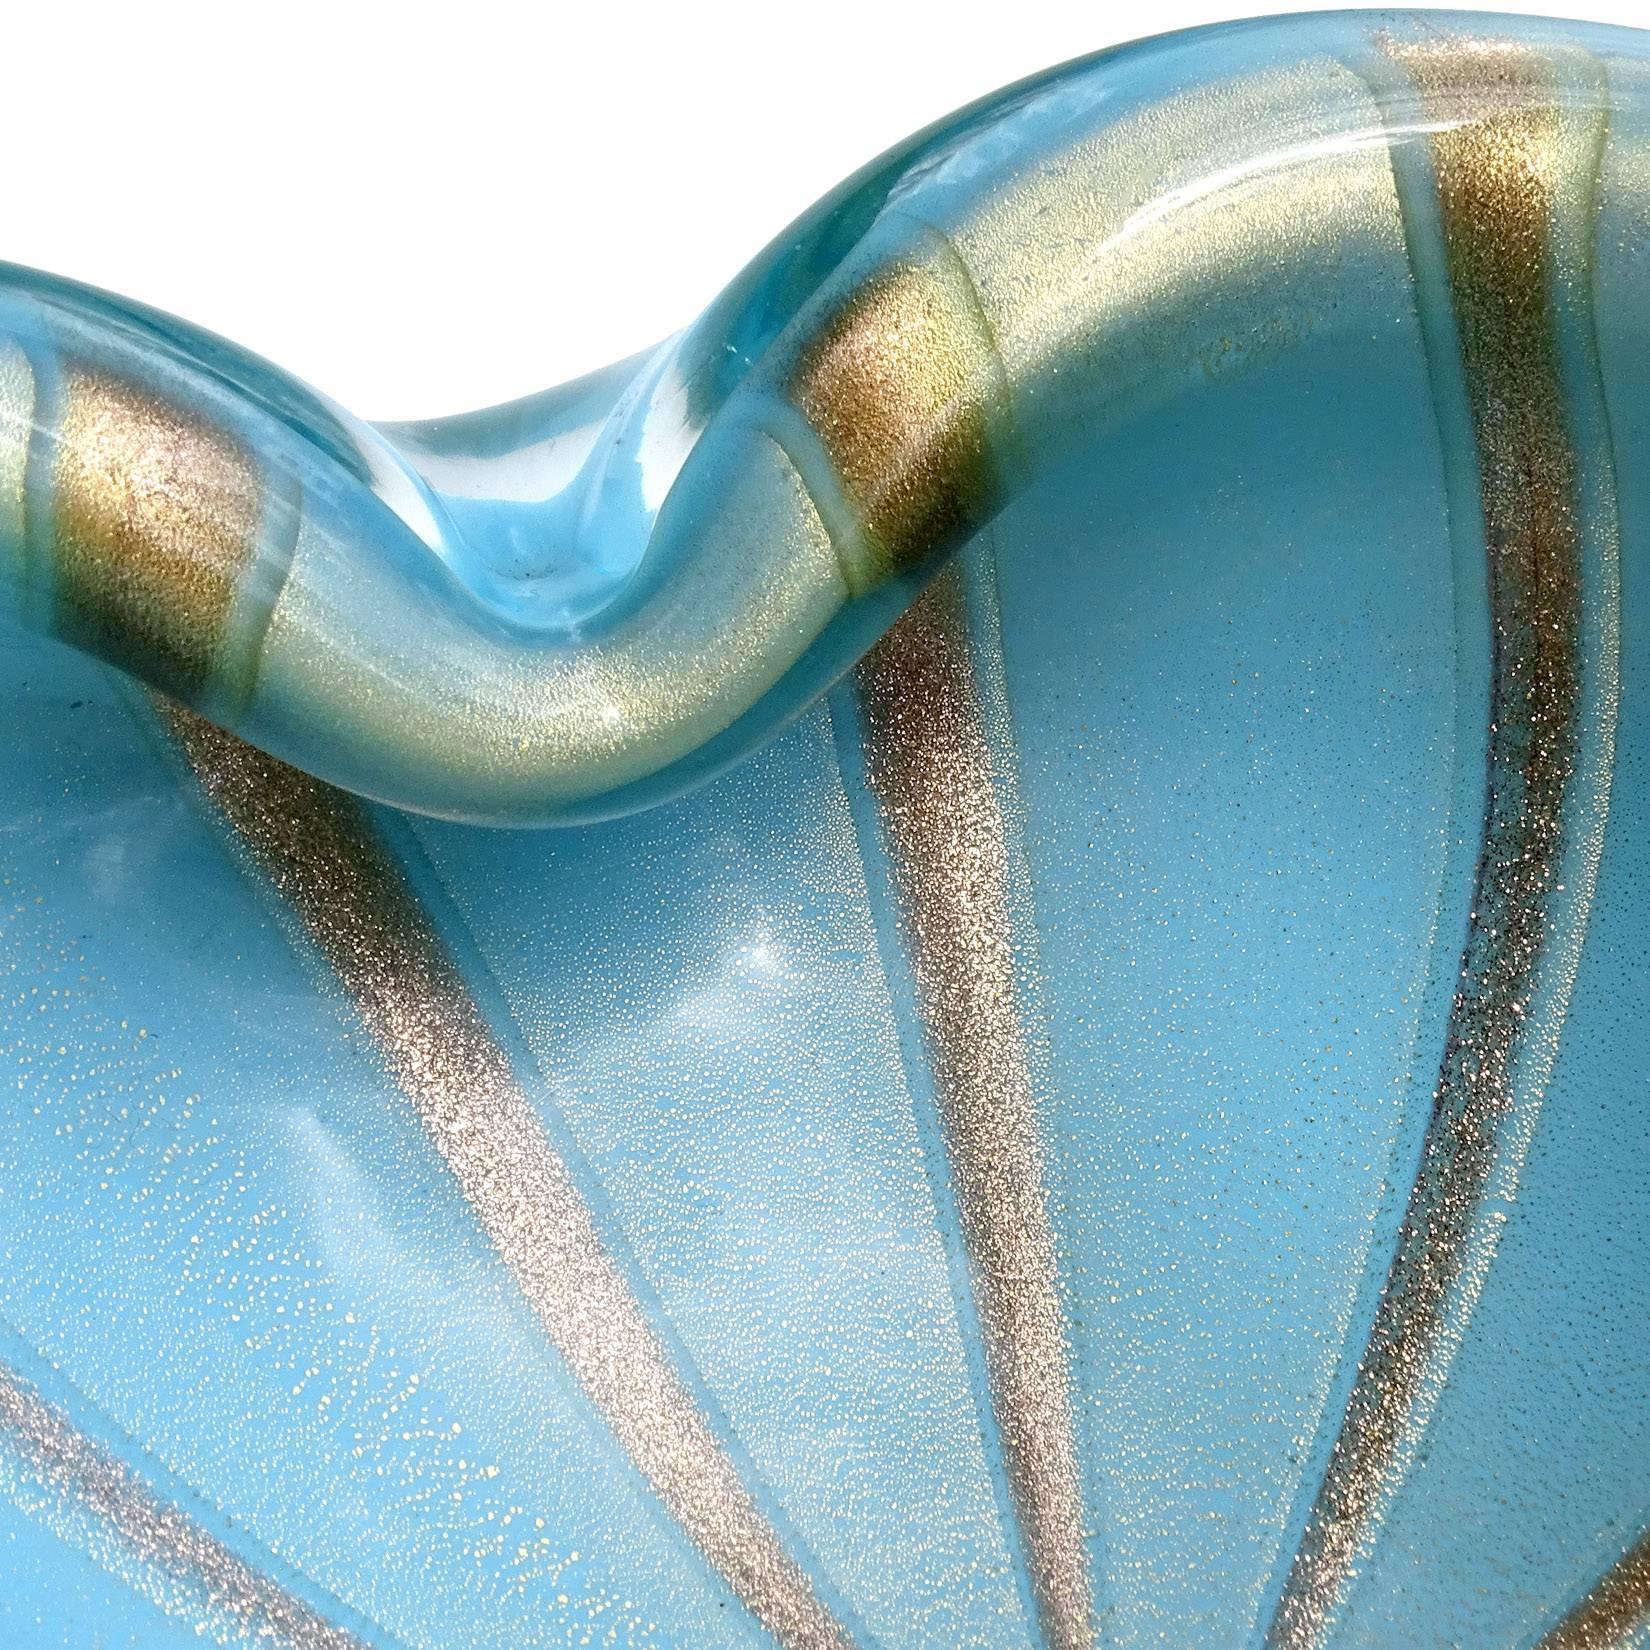 Free shipping worldwide! See details below description.

Gorgeous large Murano handblown blue, gold and aventurine flecks art glass bowl. Documented to designer Alfredo Barbini, circa 1950-1960. Measures 8 1/4